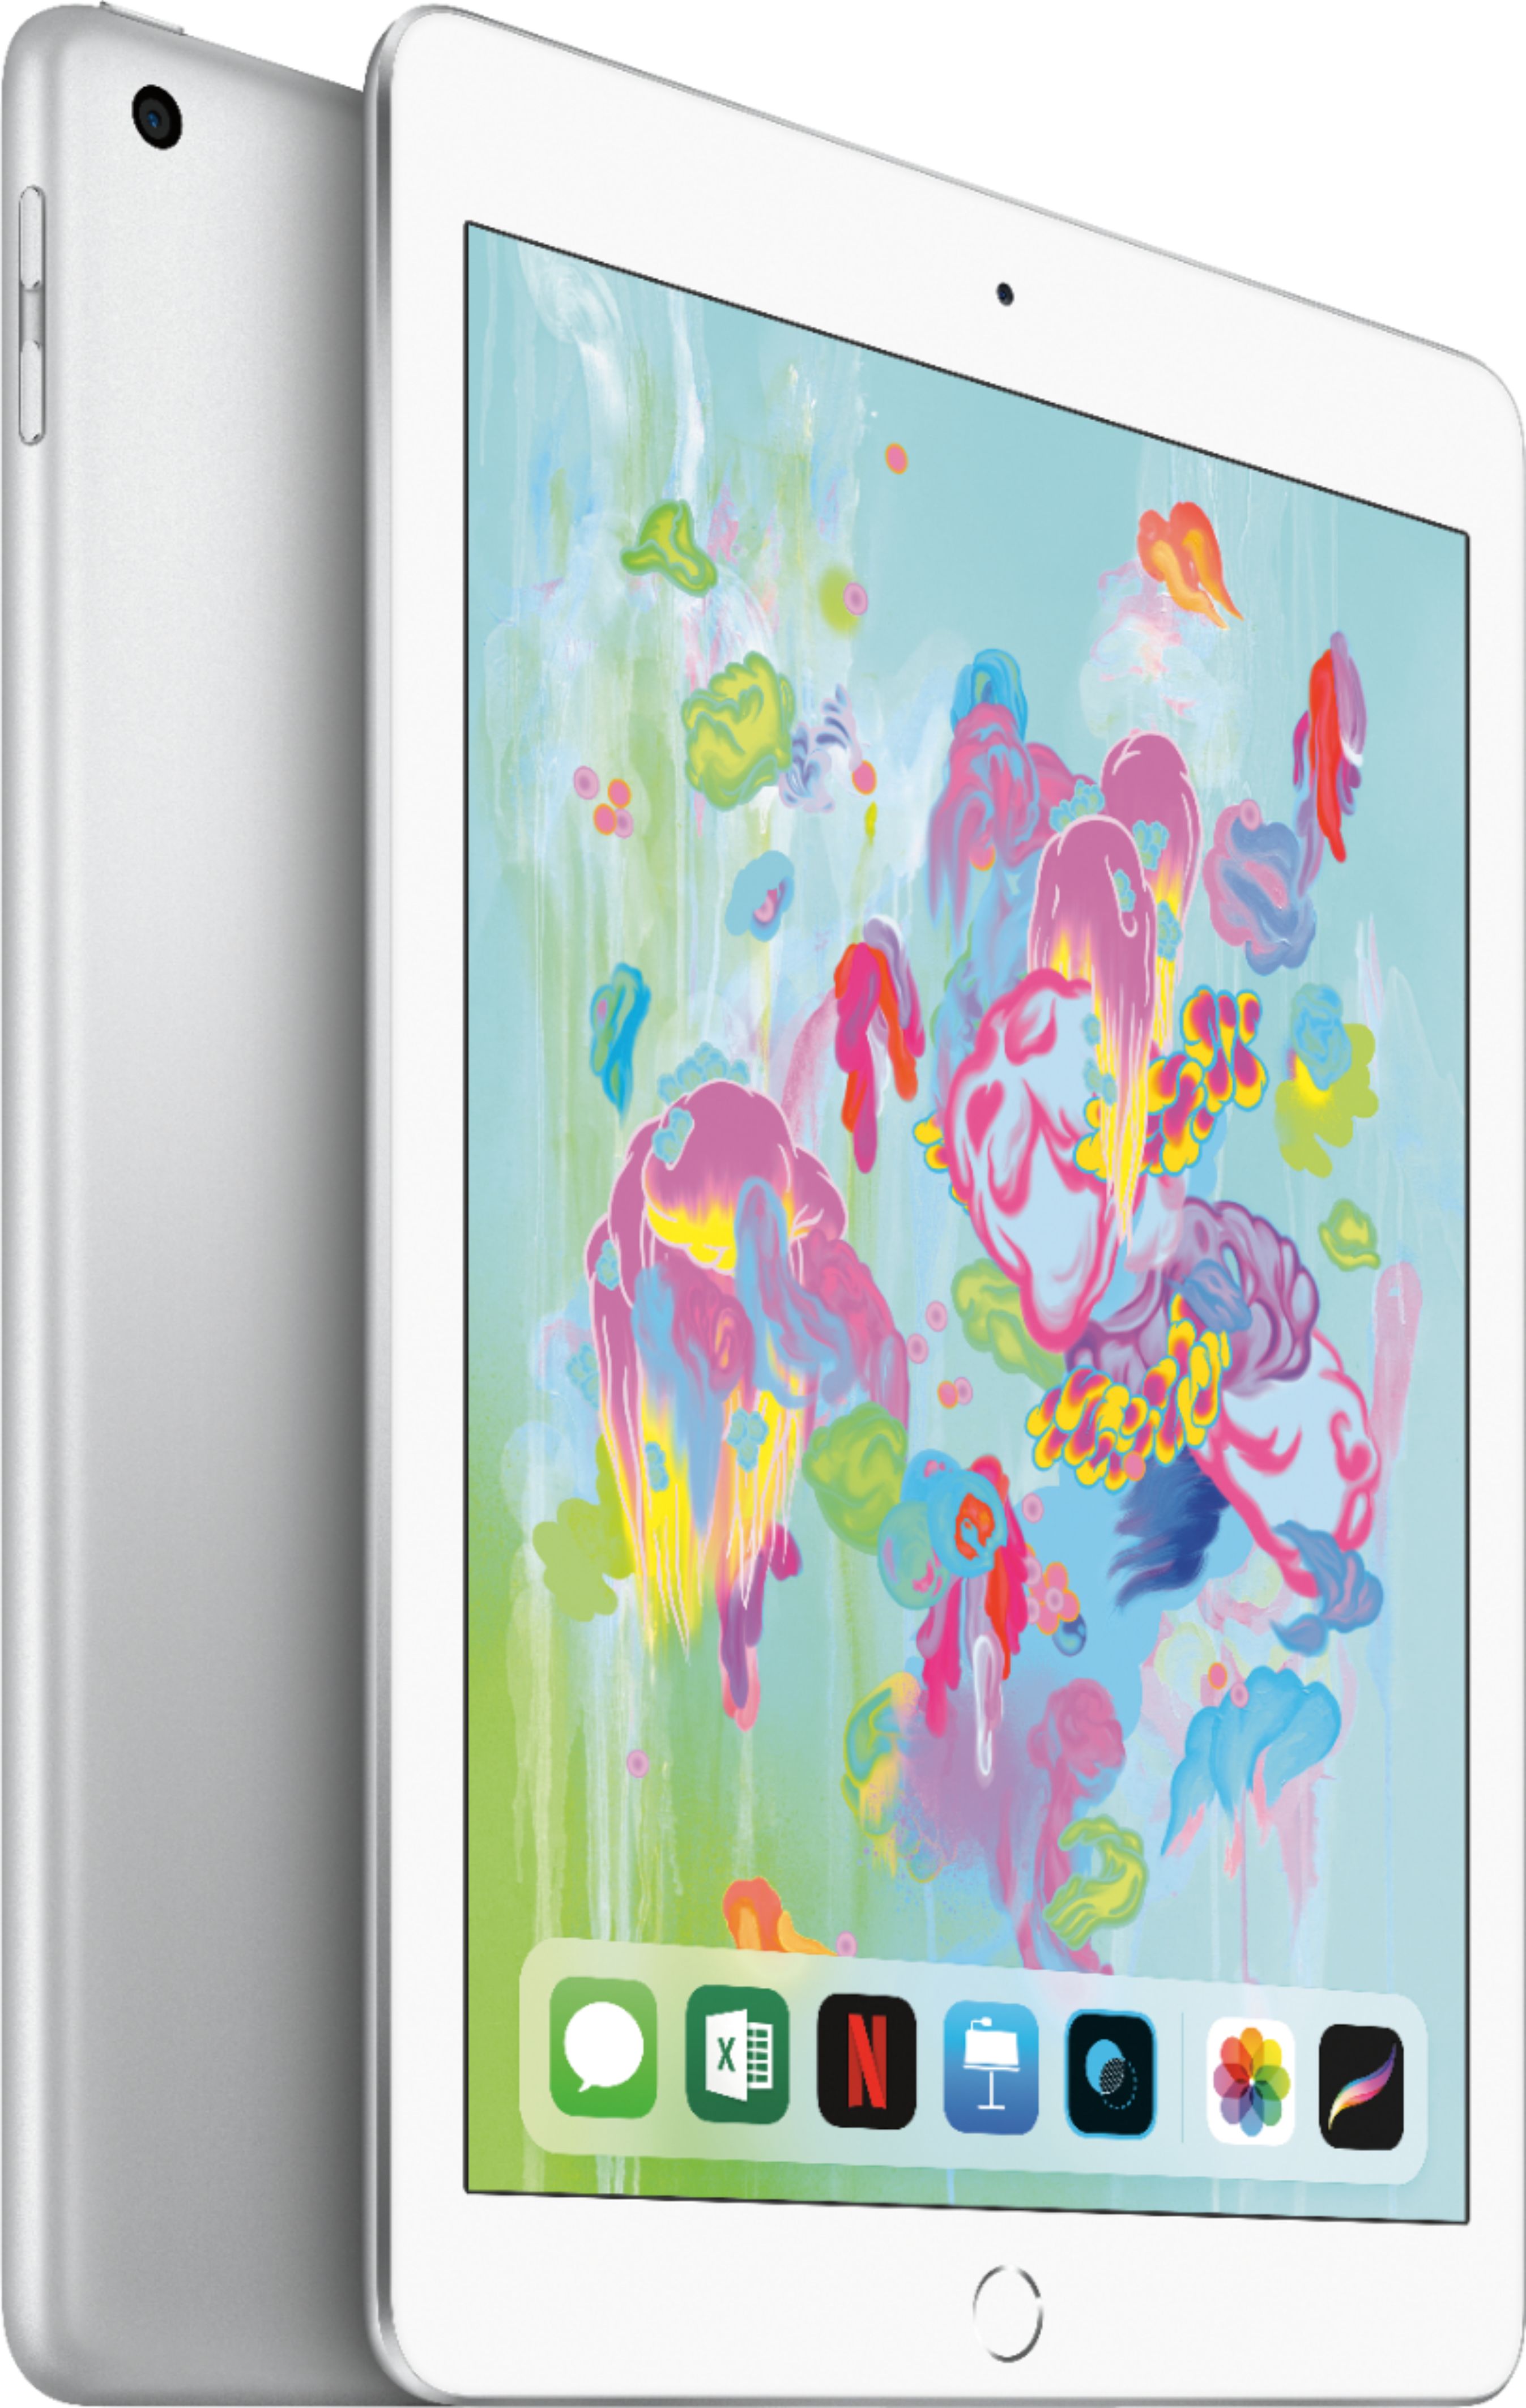 Customer Reviews: Apple iPad 6th gen with Wi-Fi 32GB Silver MR7G2LL/A